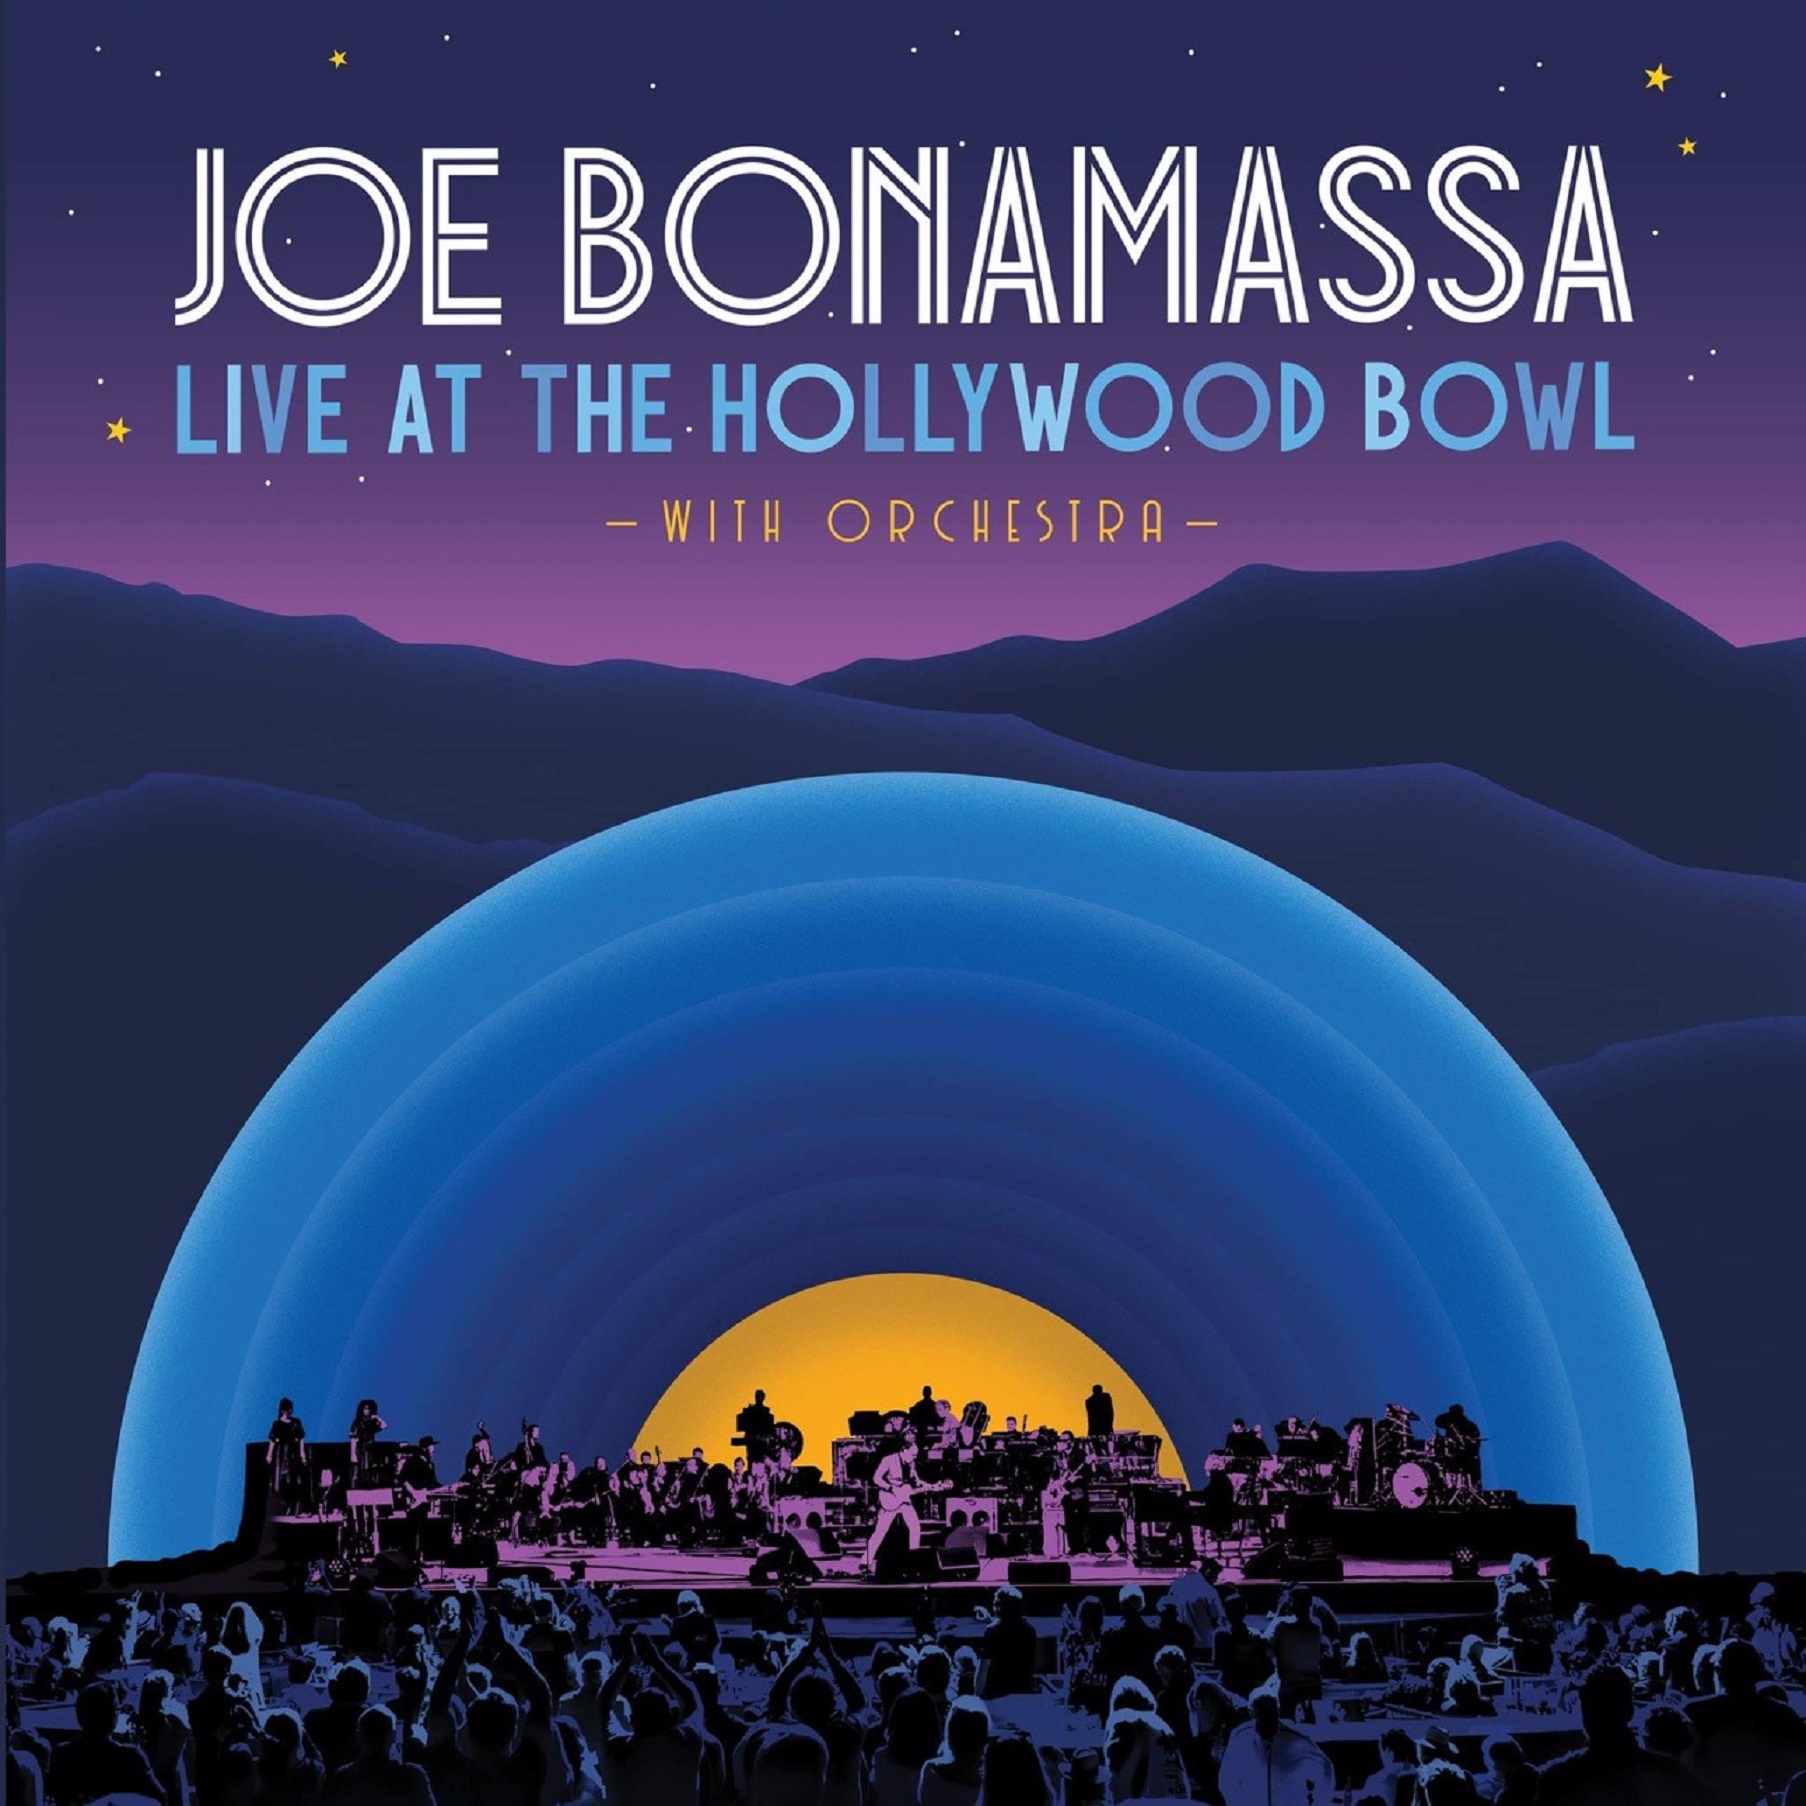 Joe Bonamassa Releases Poignant New Single "The Last Matador Of Bayonne"